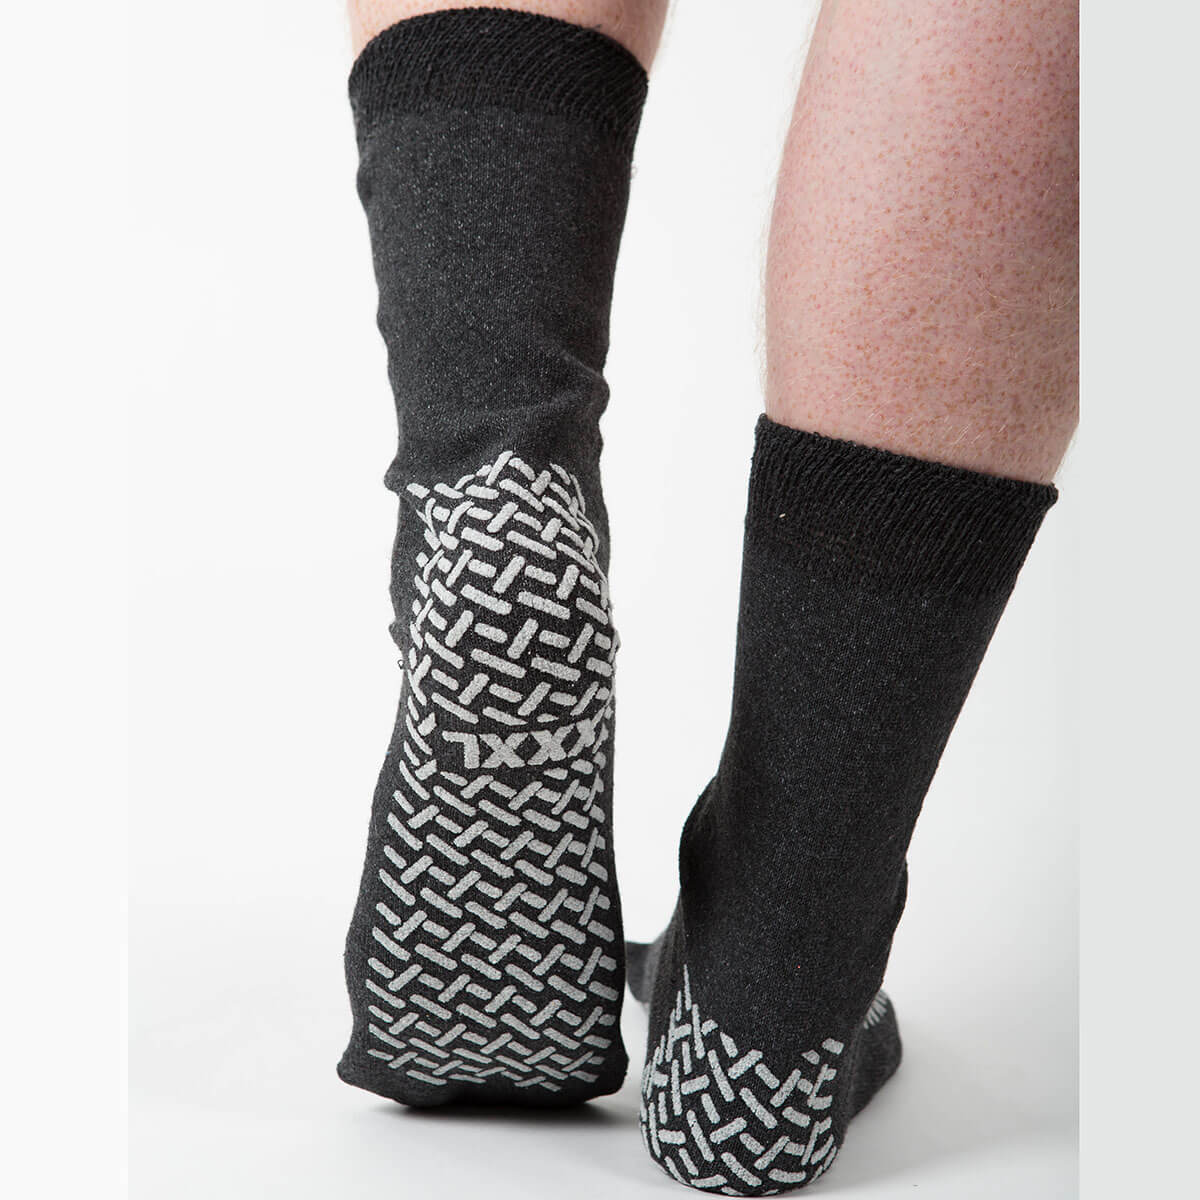 3XL Hospital Socks For Swollen Feet